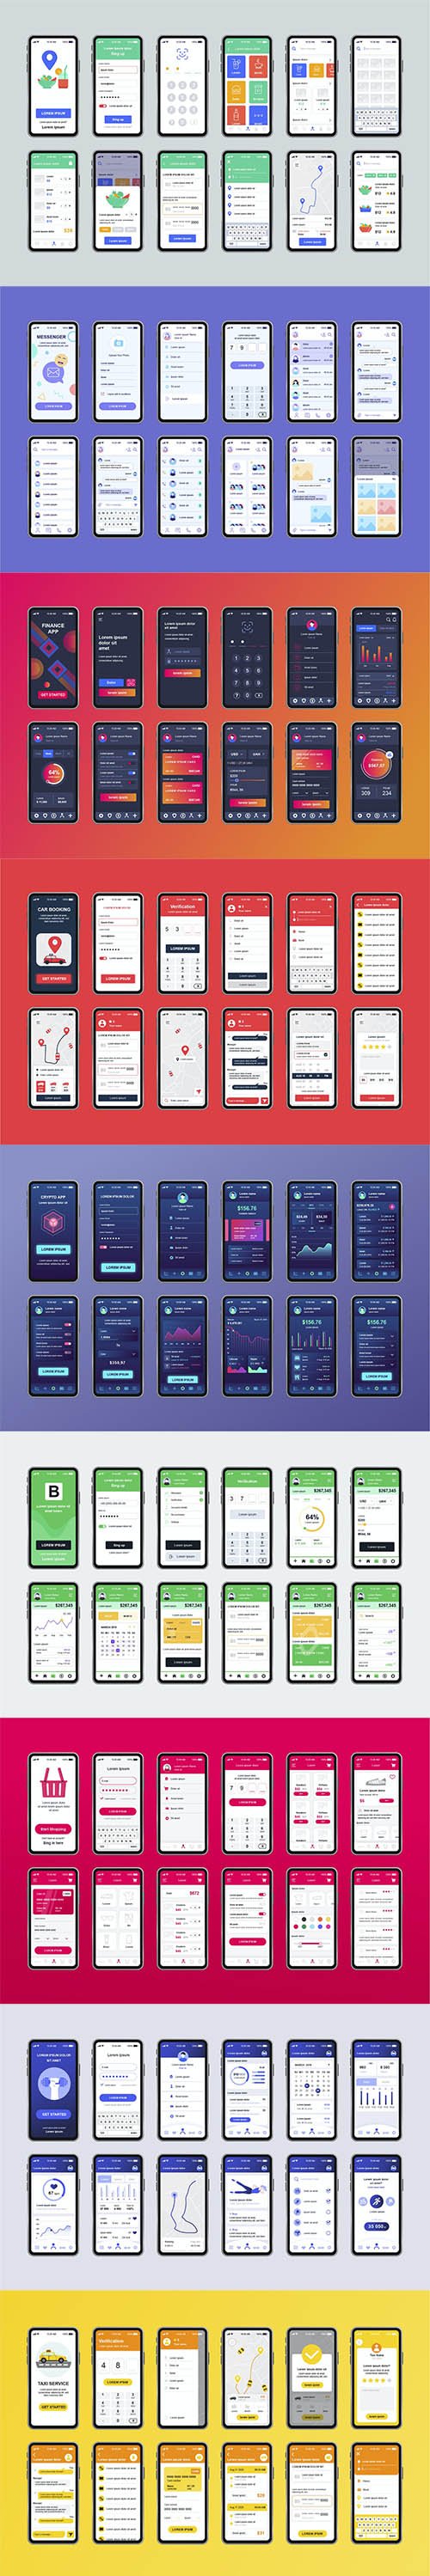 Mobile App UI Kits Pack